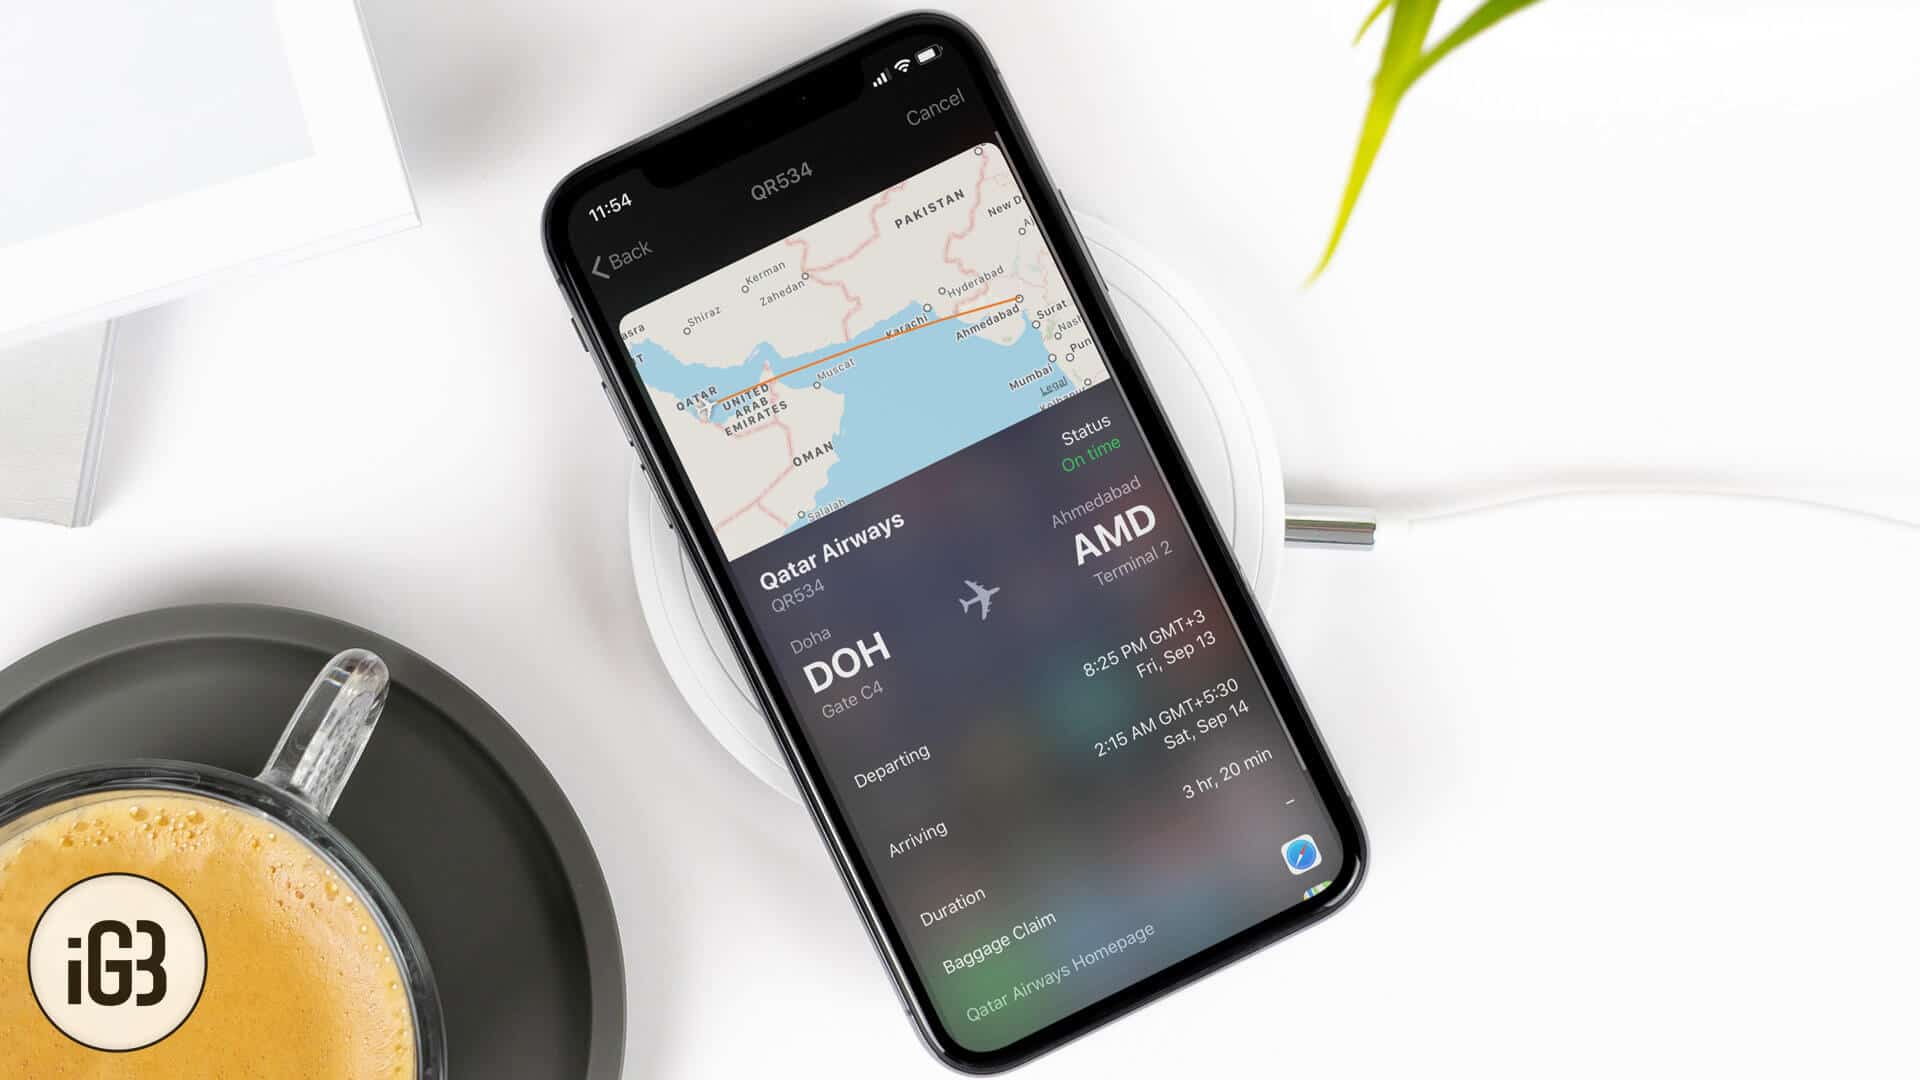 How to track flight status on iphone or ipad using spotlight